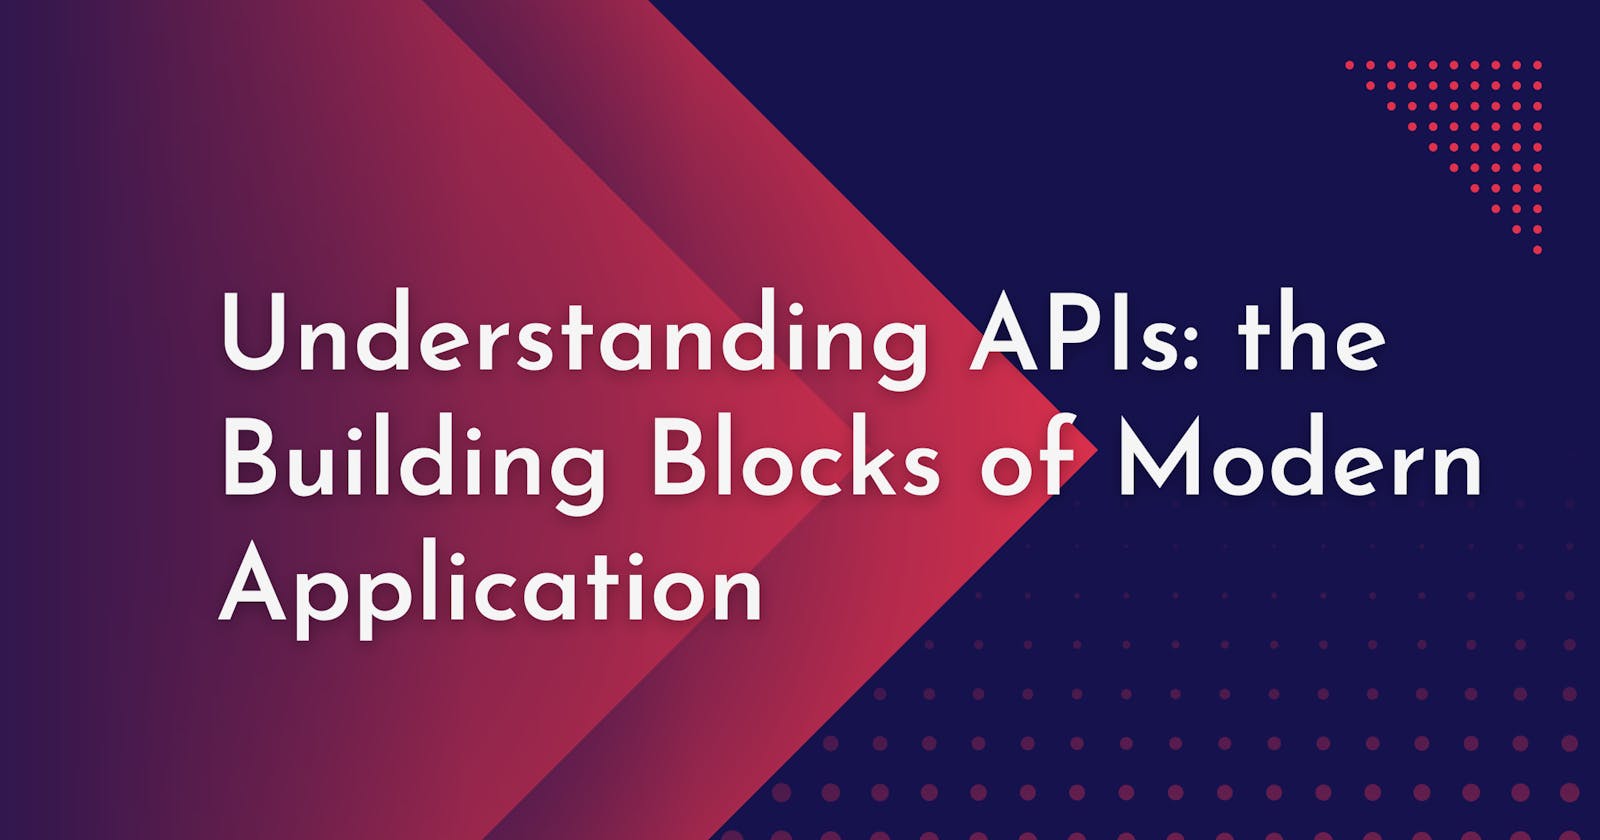 Understanding APIs: the Building Blocks of Modern Technology